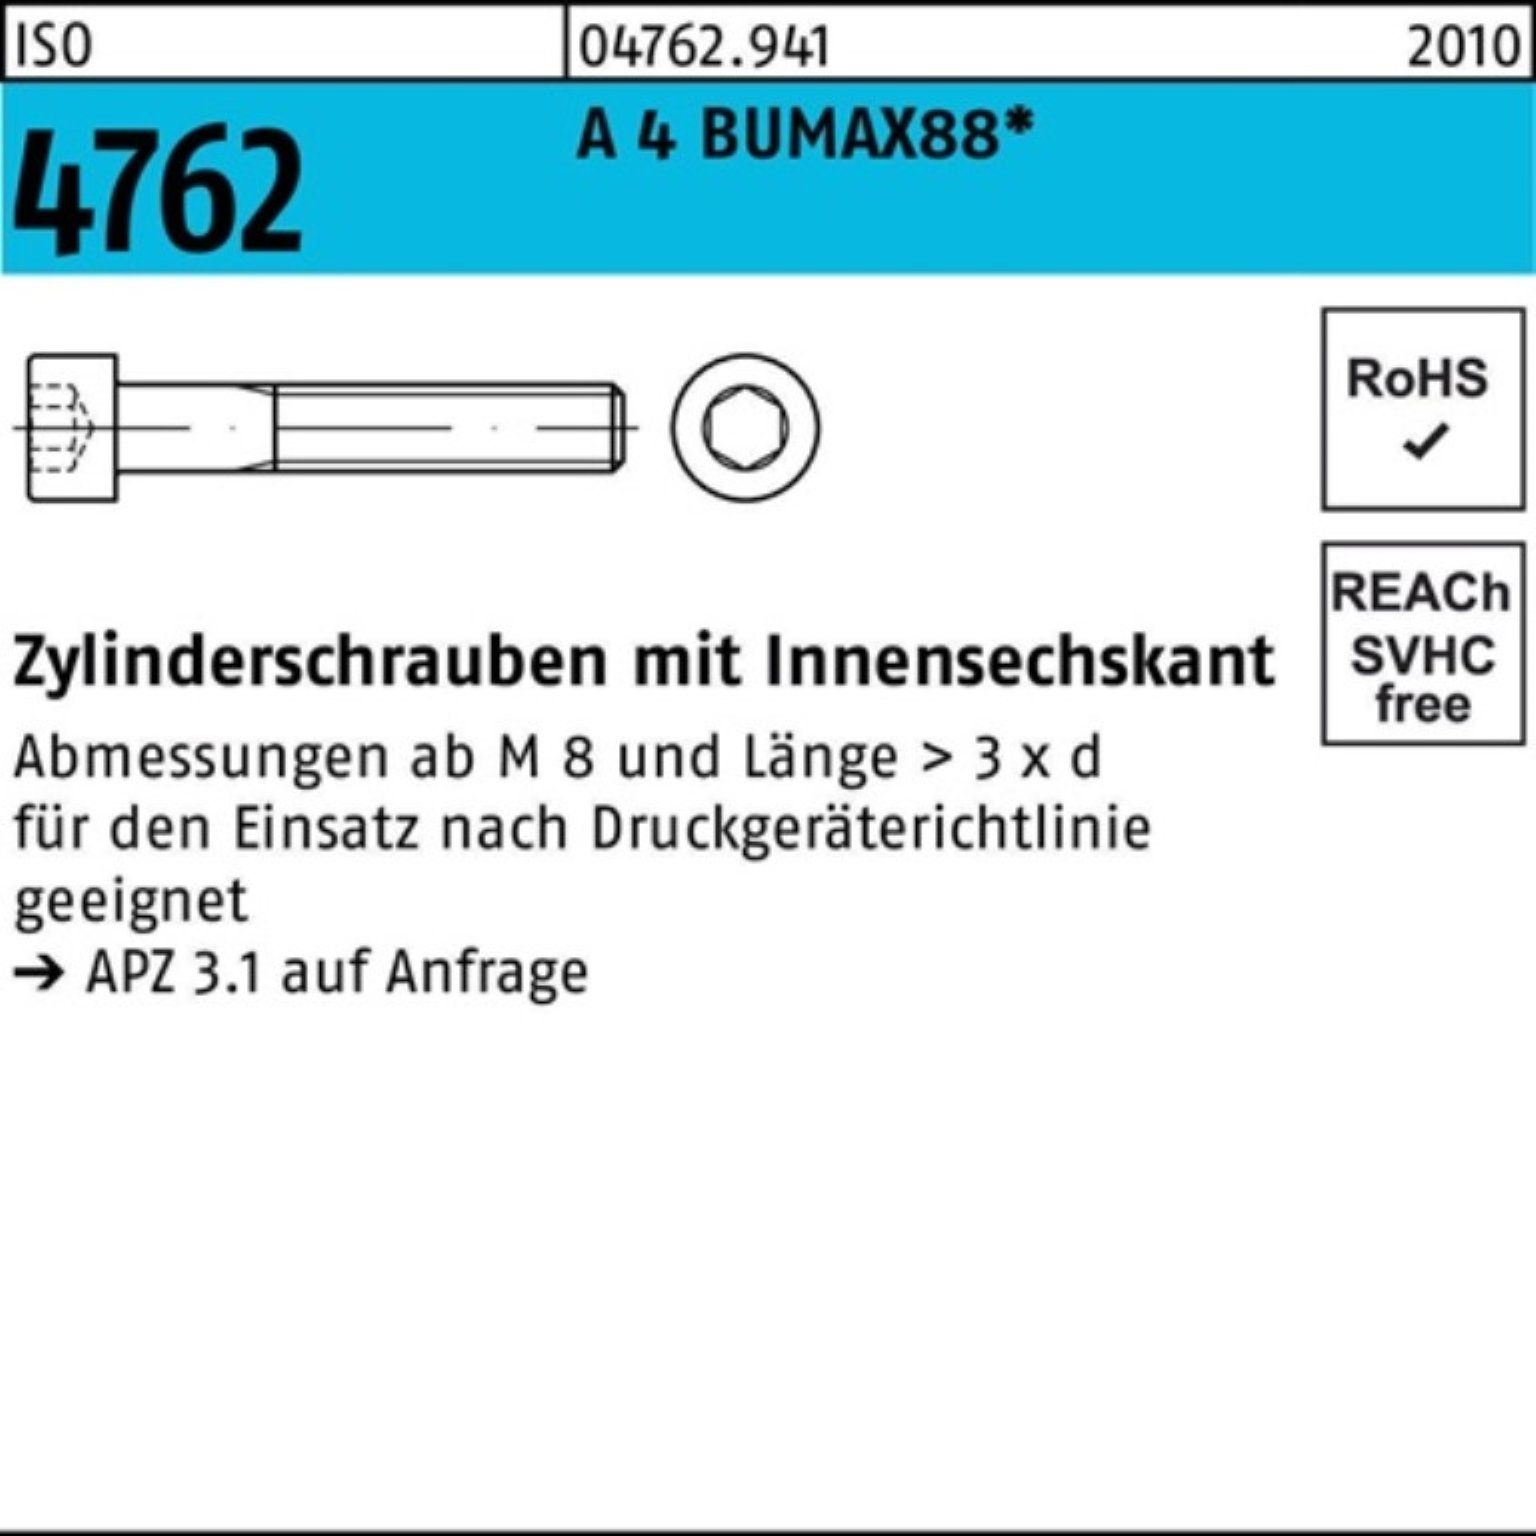 Bufab Zylinderschraube 100er Pack Zylinderschraube ISO 4762 Innen-6kt M10x 20 A 4 BUMAX88 50